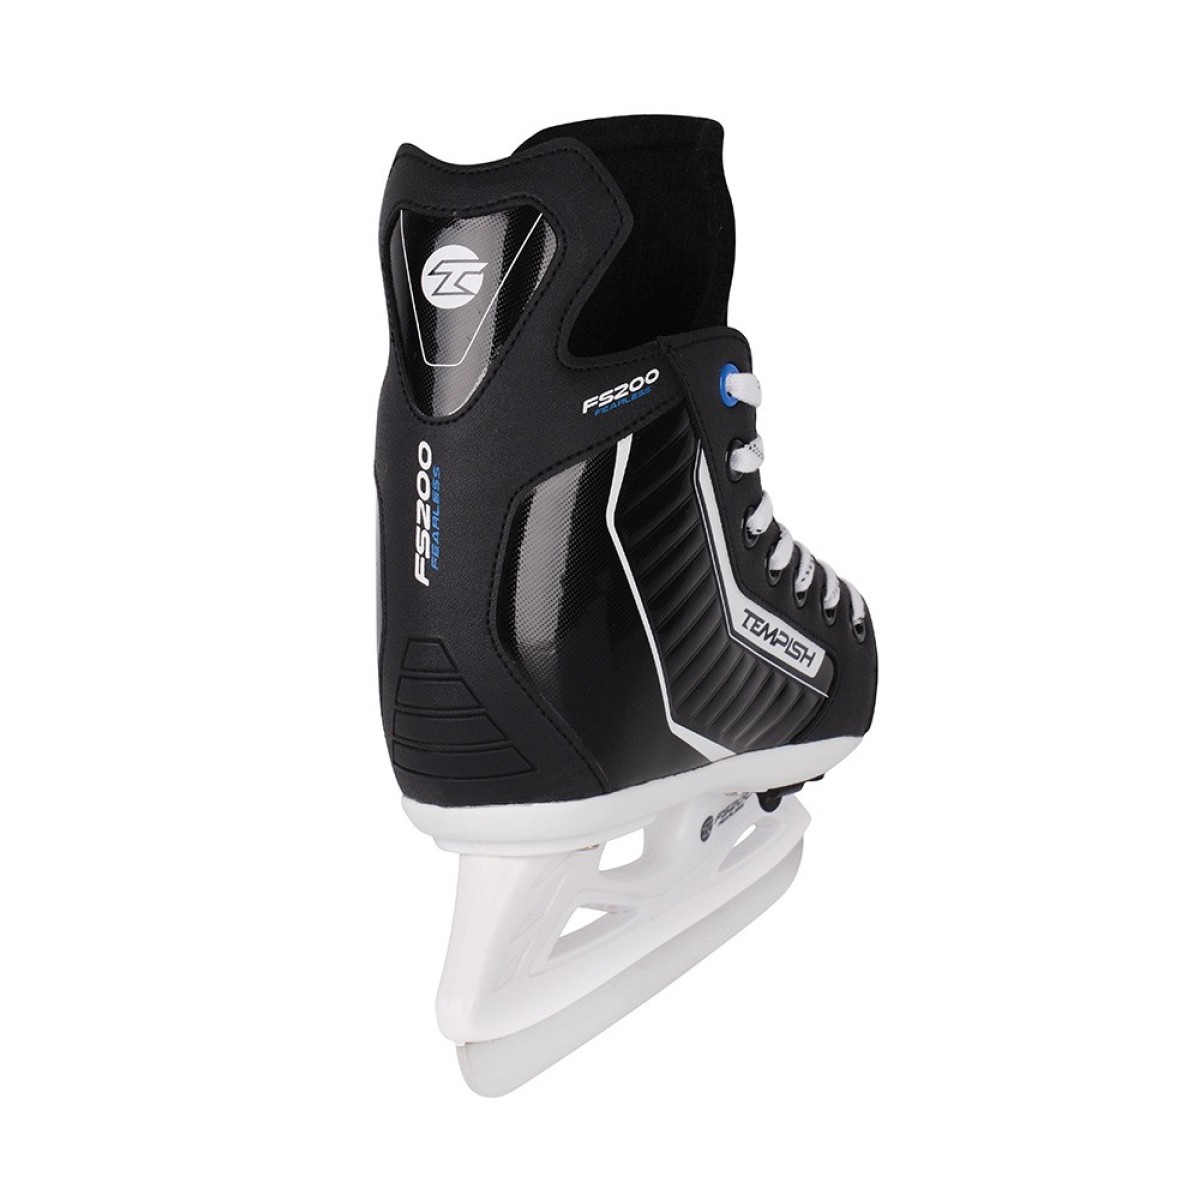 FS 200 adjustable hockey skate TEMPISH - view 2